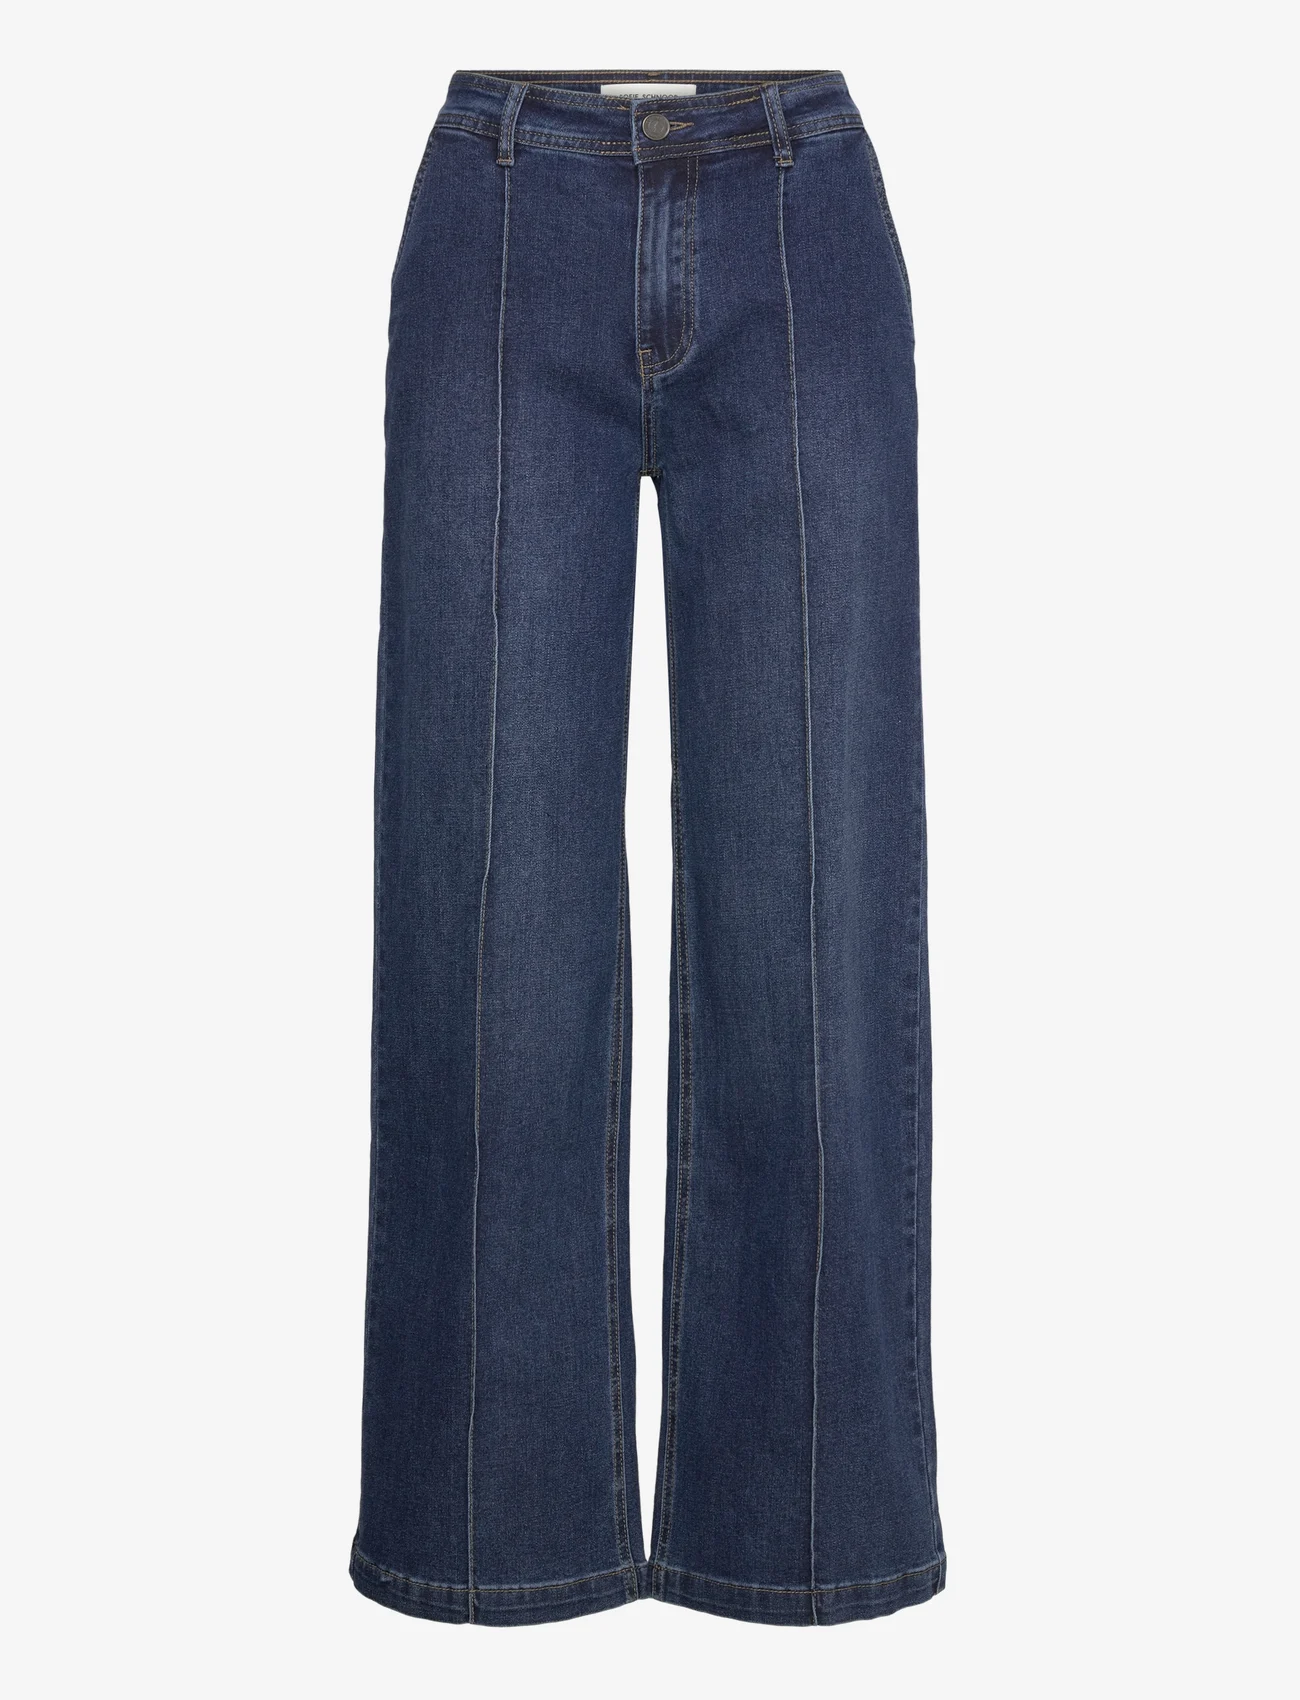 Sofie Schnoor - Jeans - pantalons larges - dark denim blue - 0